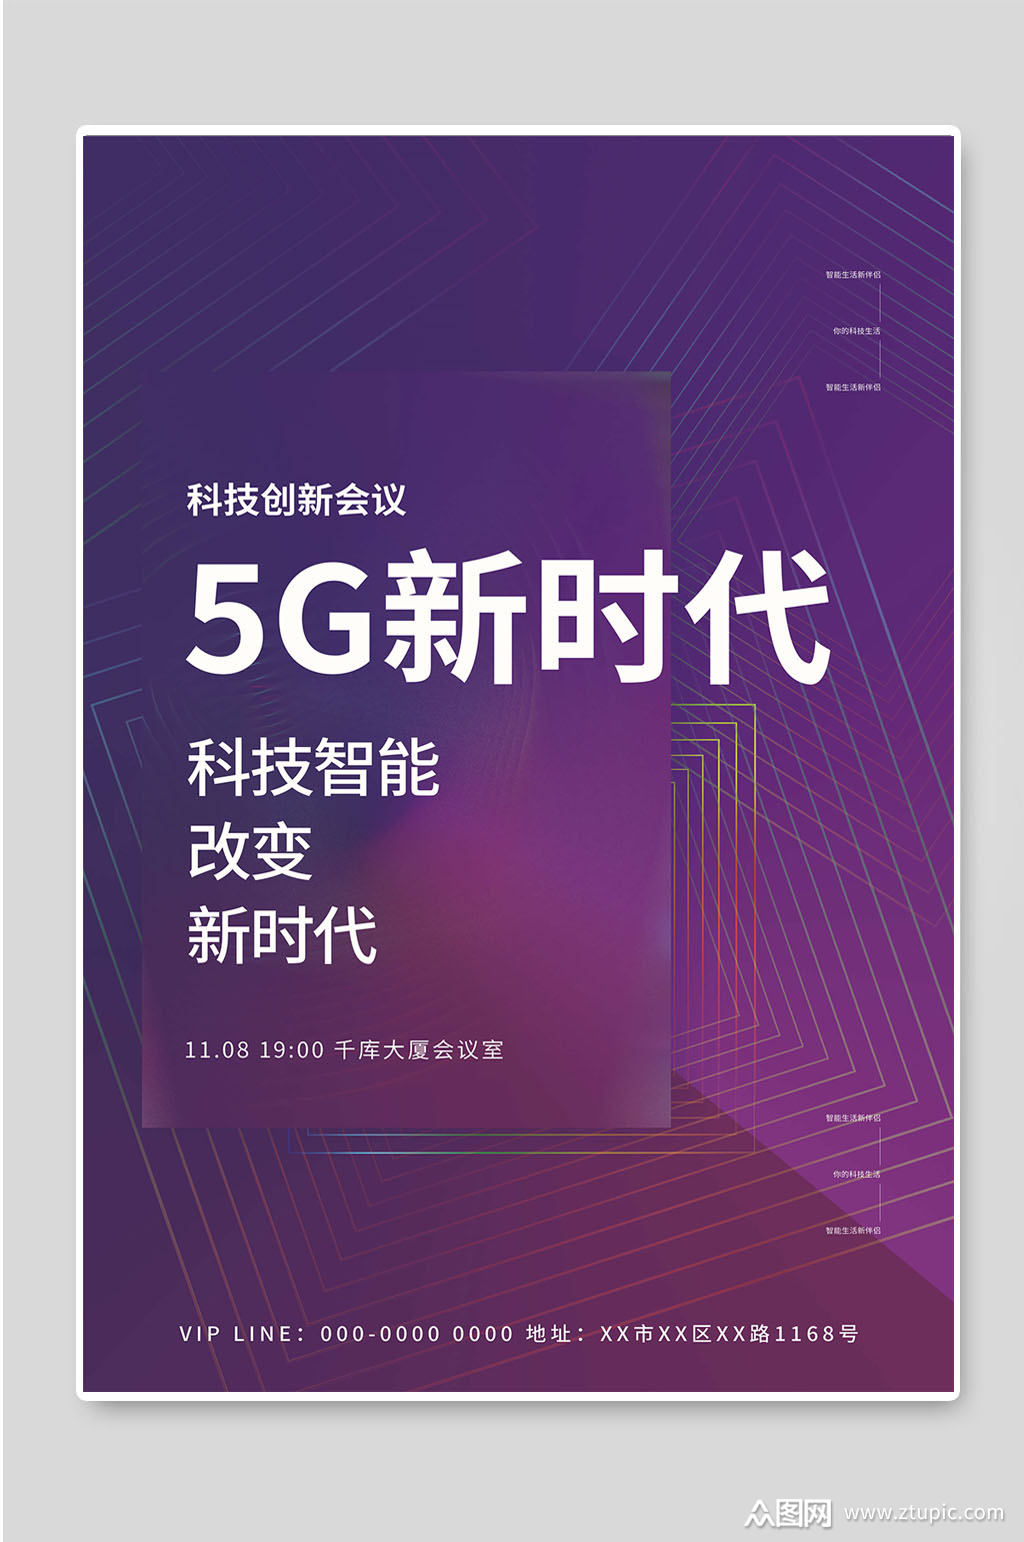 5G 网络覆盖上海，引领全新信息时代，生活更便利丰富  第8张